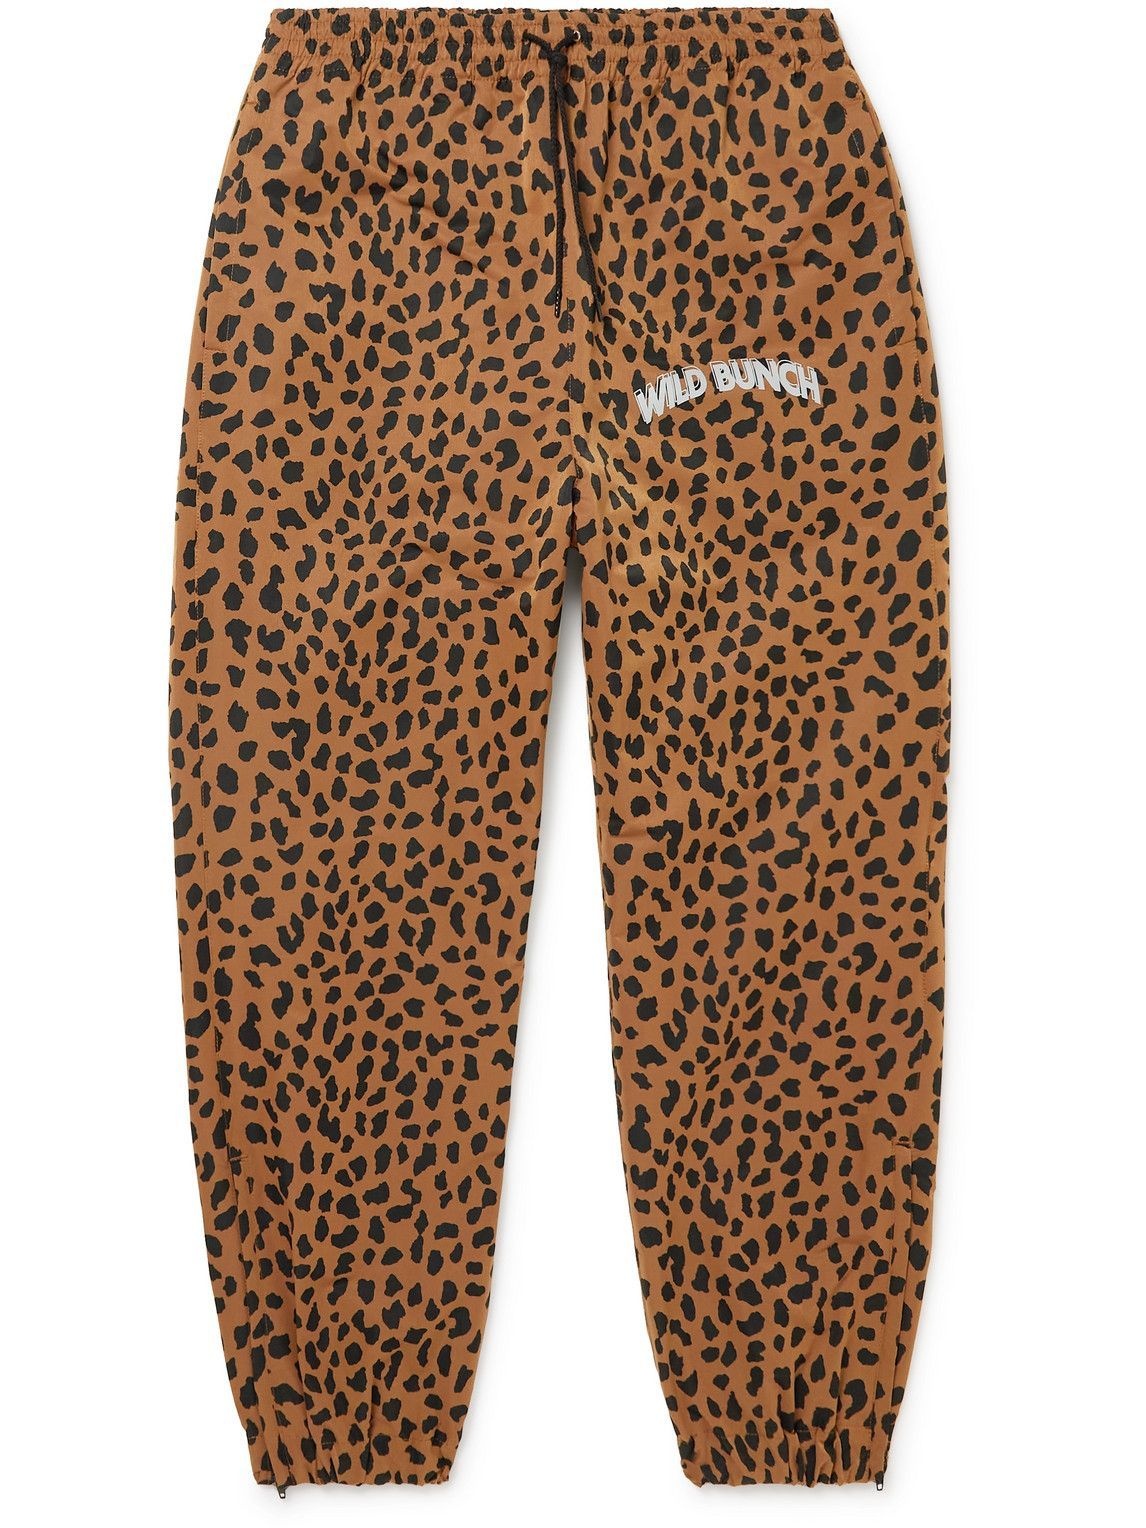 Wacko Maria - Wild Bunch Tapered Leopard-Print Shell Sweatpants